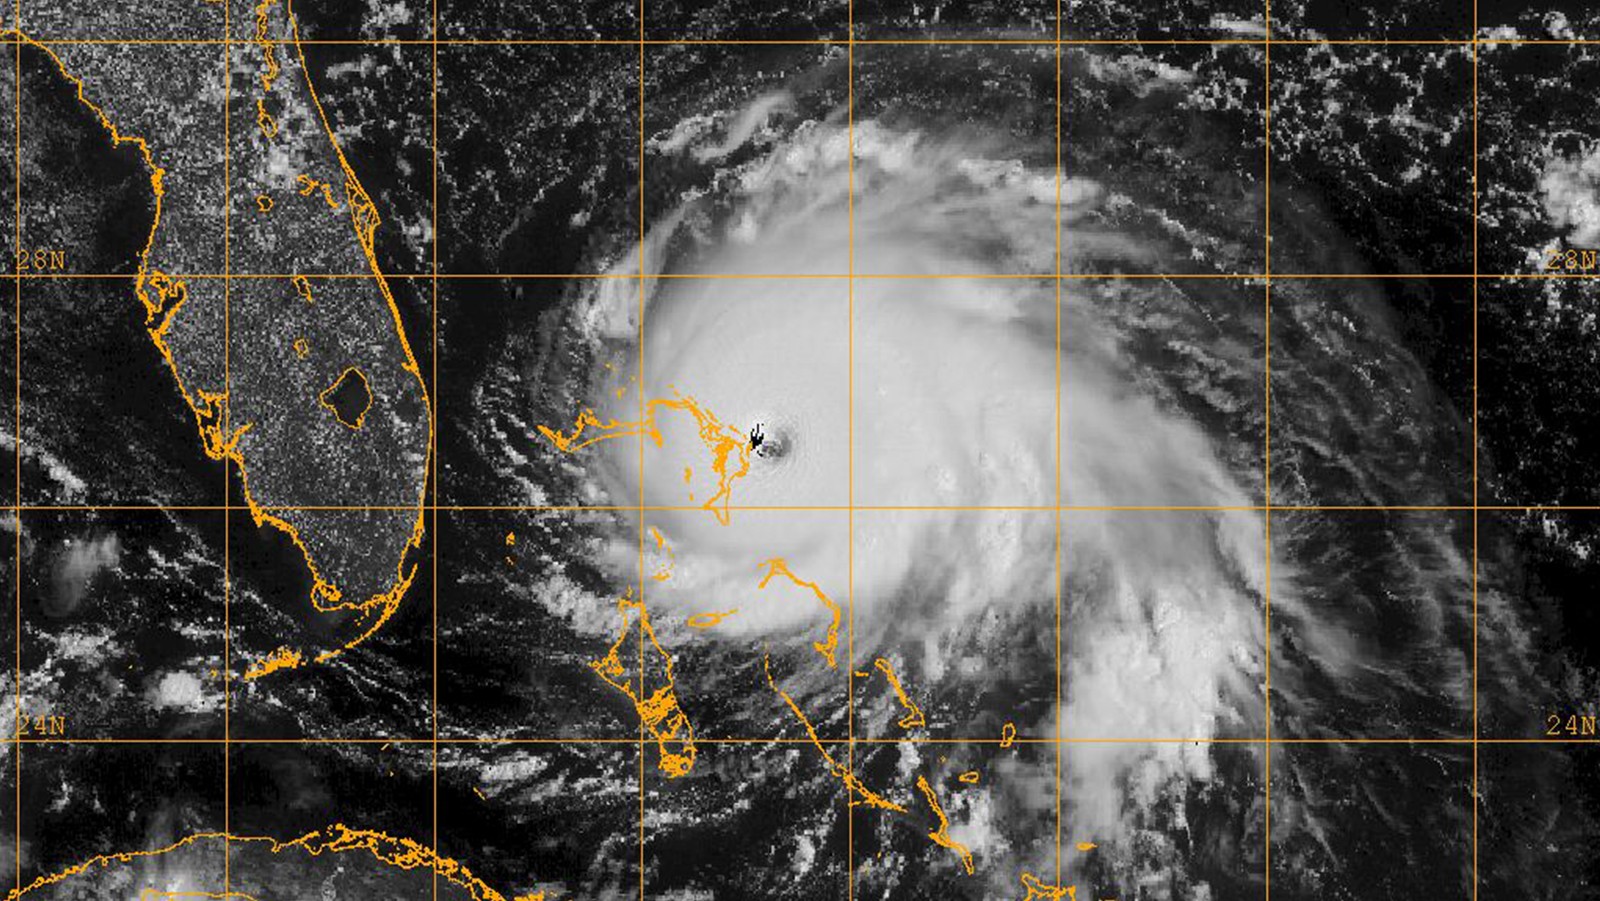 GOES Satellite Image of Hurricane Dorian from September 1st, 2019. Photo Credit: GOES.